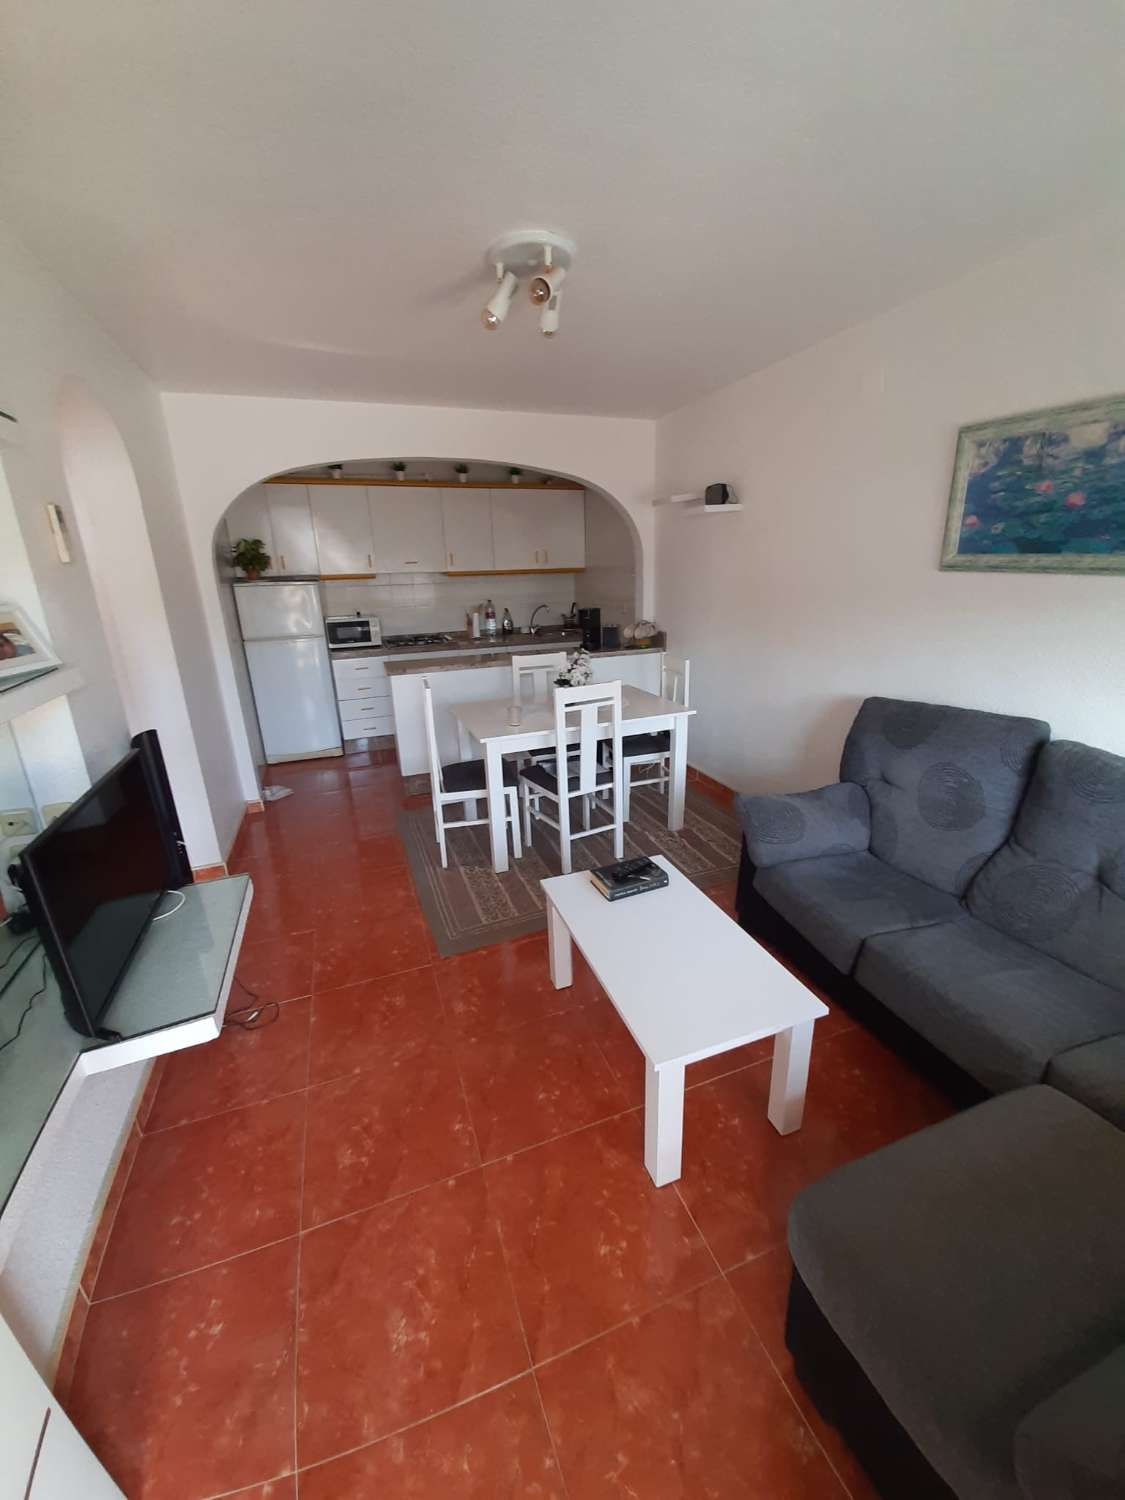 Semi-detached duplex bungalow 3 bedrooms, pool in Torrevieja (Costa Blanca South)